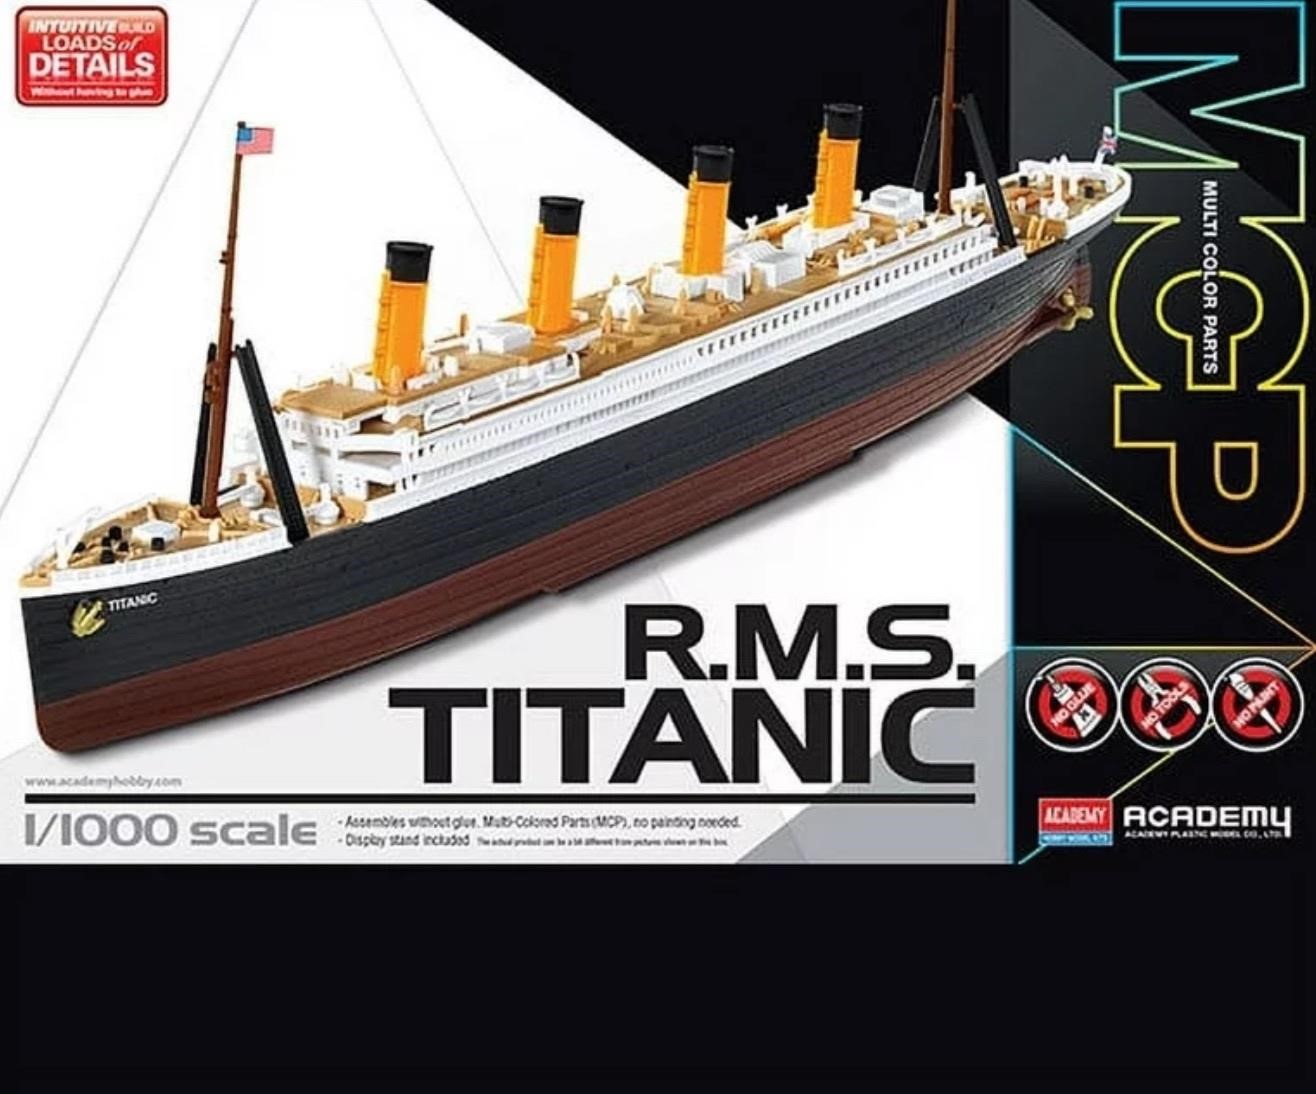 R.M.S. Titanic Multi-Color Parts (1/1000 Scale)